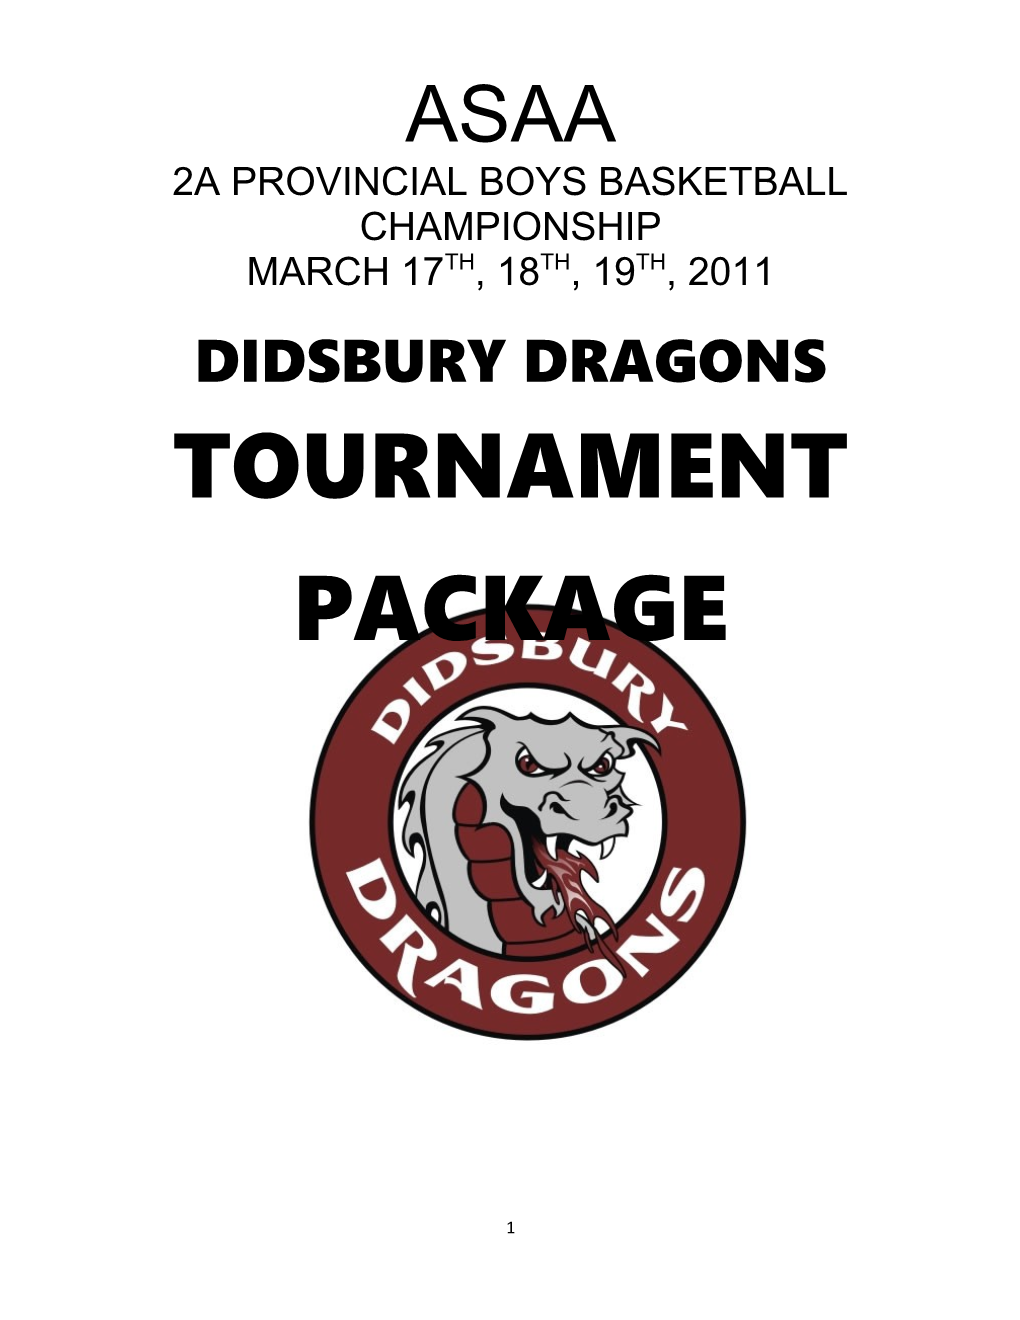 2A Provincial Boys Basketball Championship